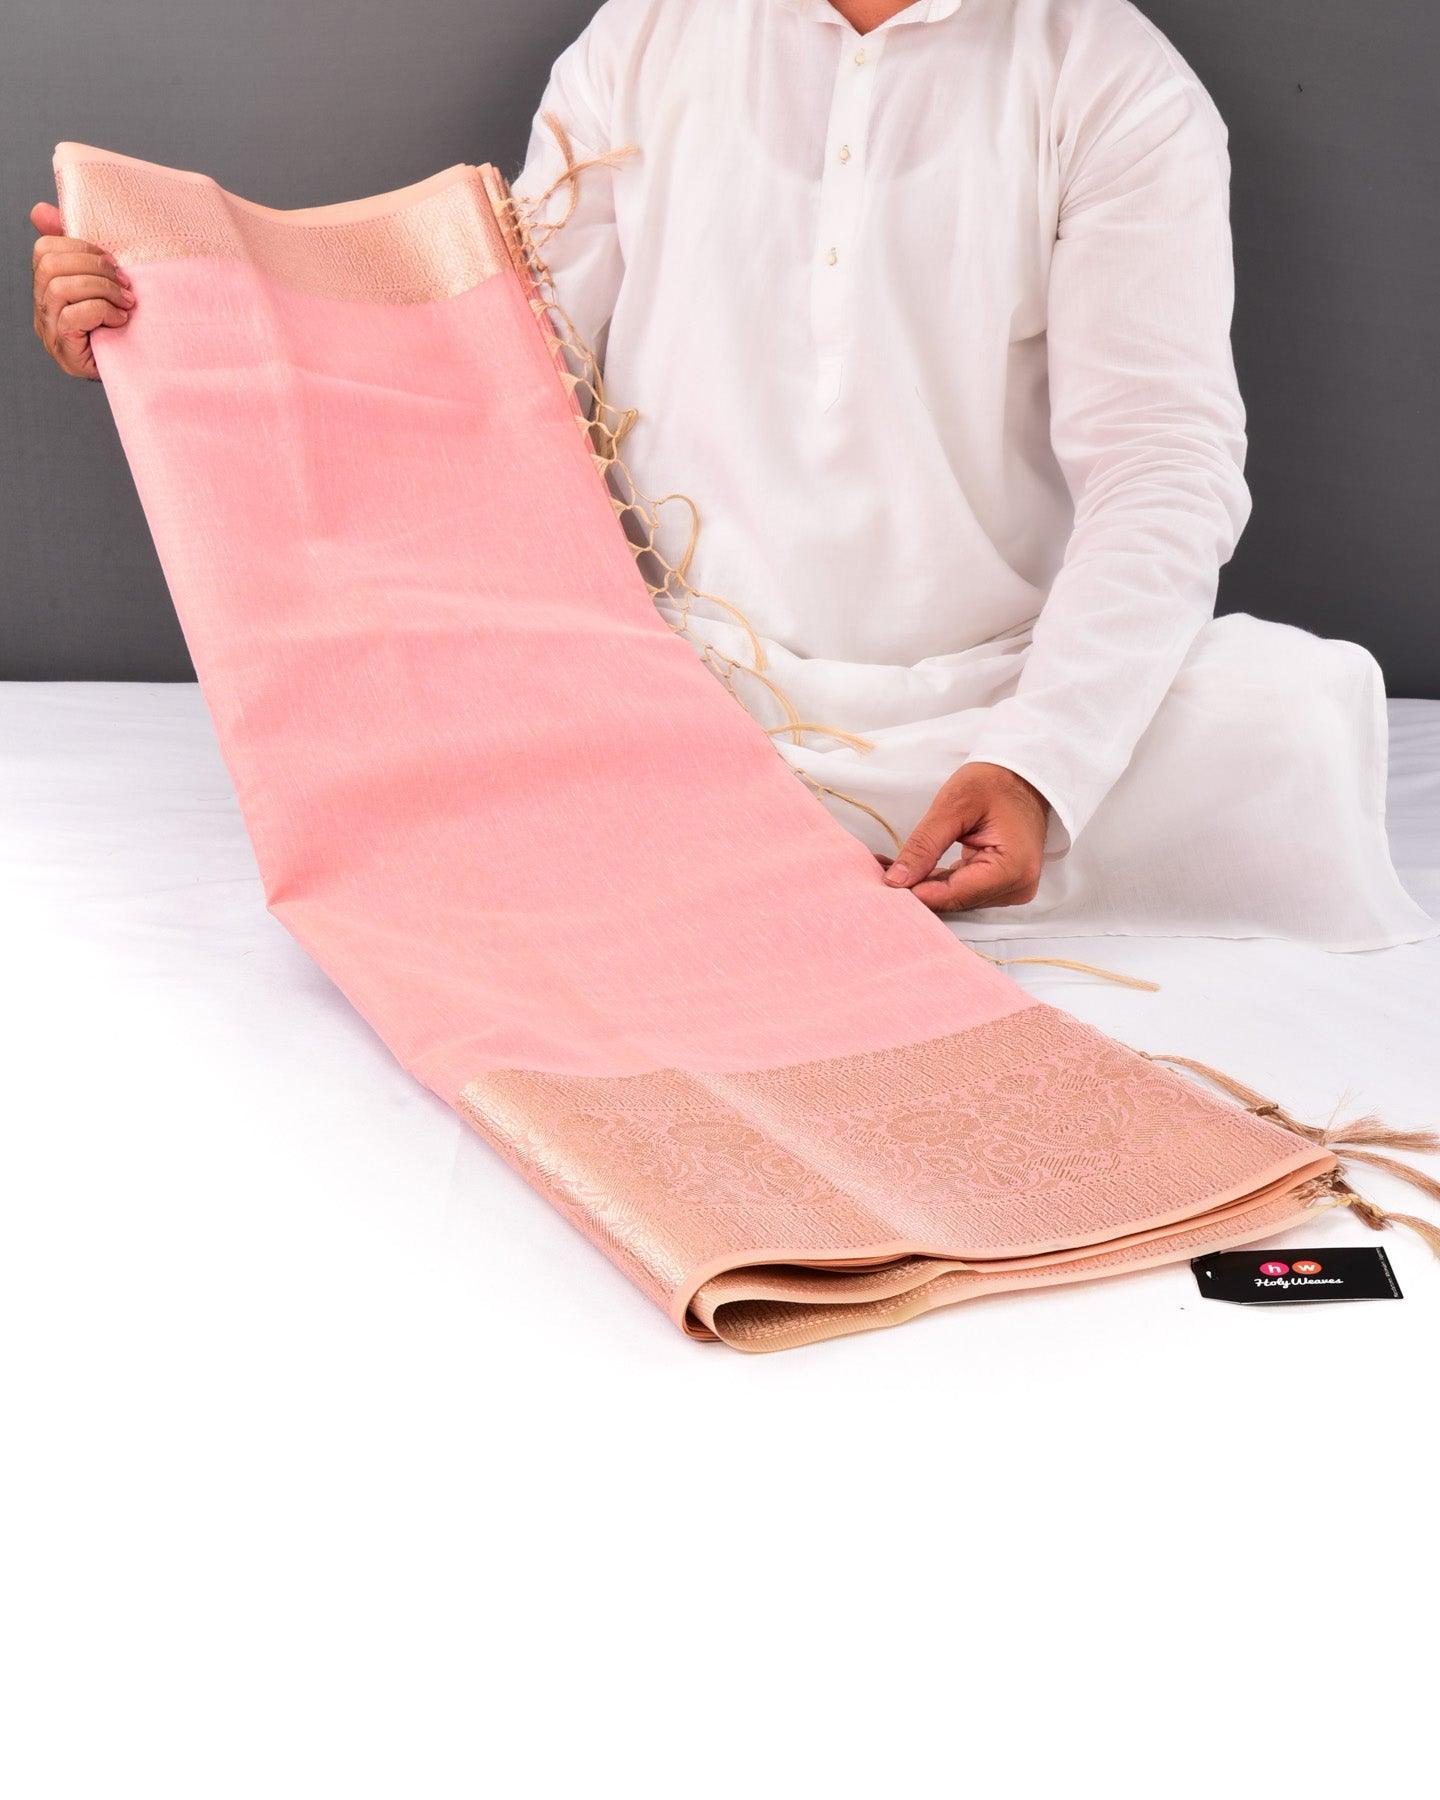 Metallic Pink Banarasi Zari Pin Stripes Brocade Woven Art Cotton Tissue Saree with Zari Border - By HolyWeaves, Benares